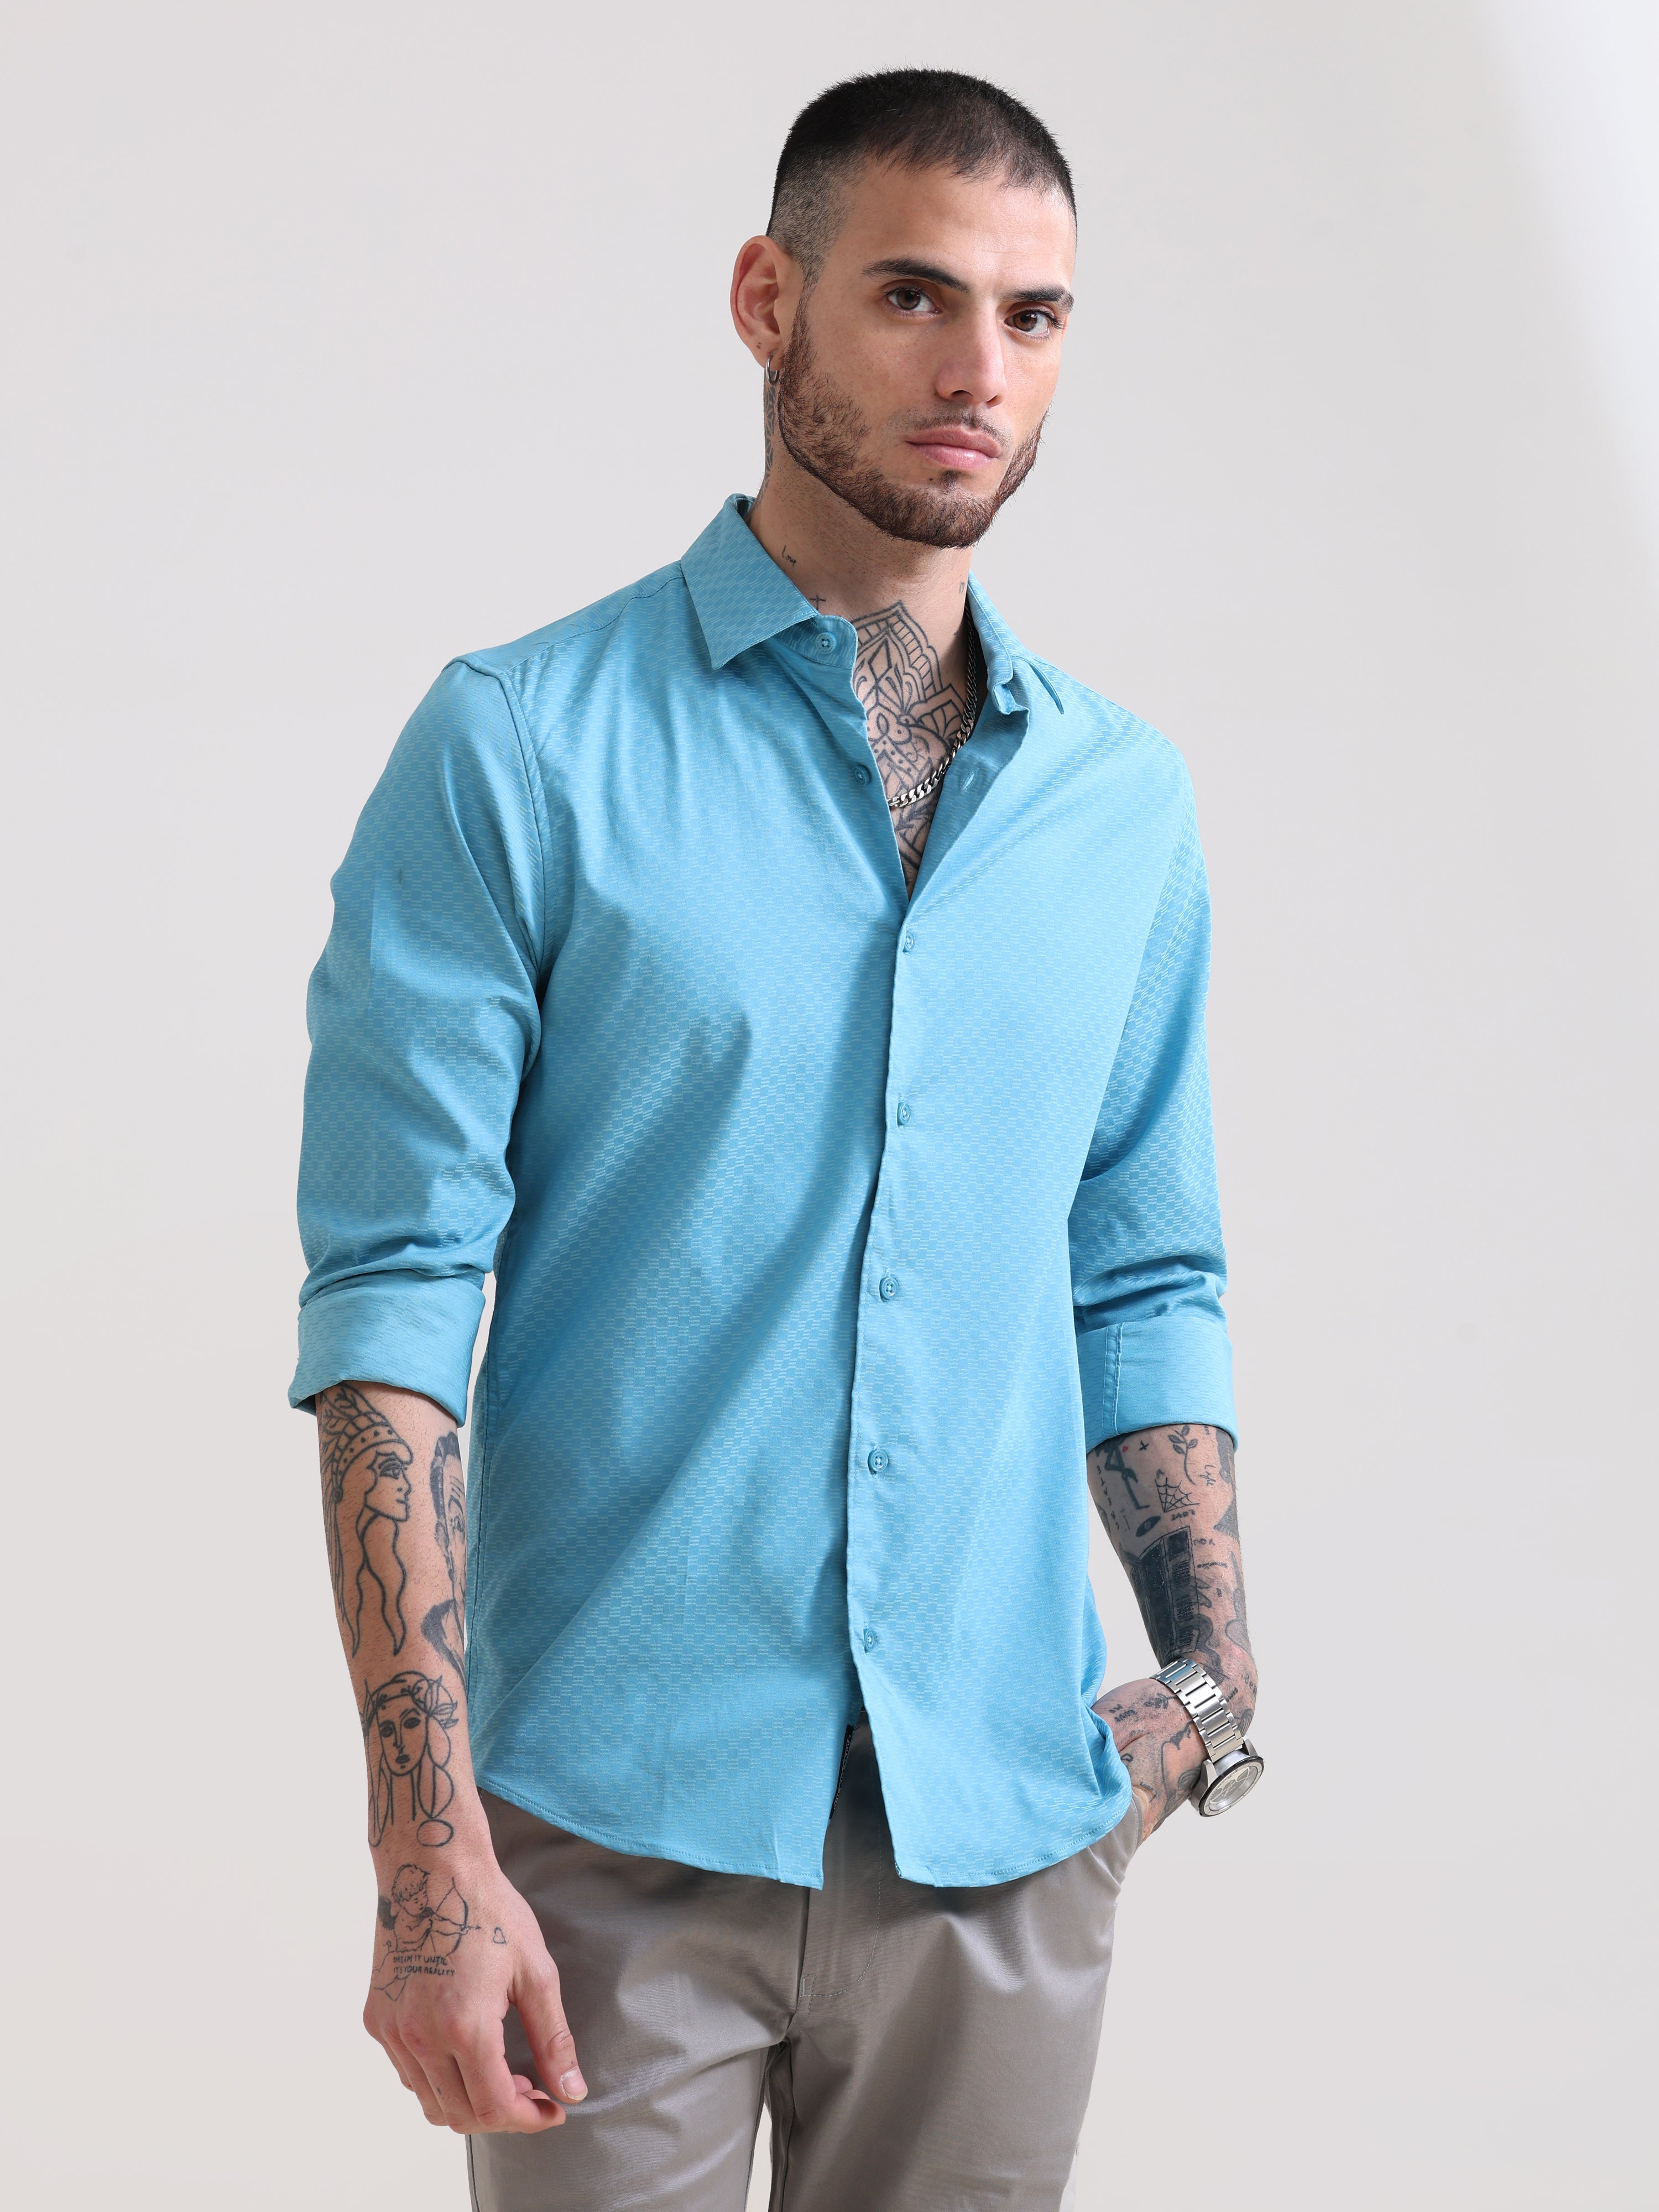 Flourescent Blue Textured Solid ShirtRs. 1399.00